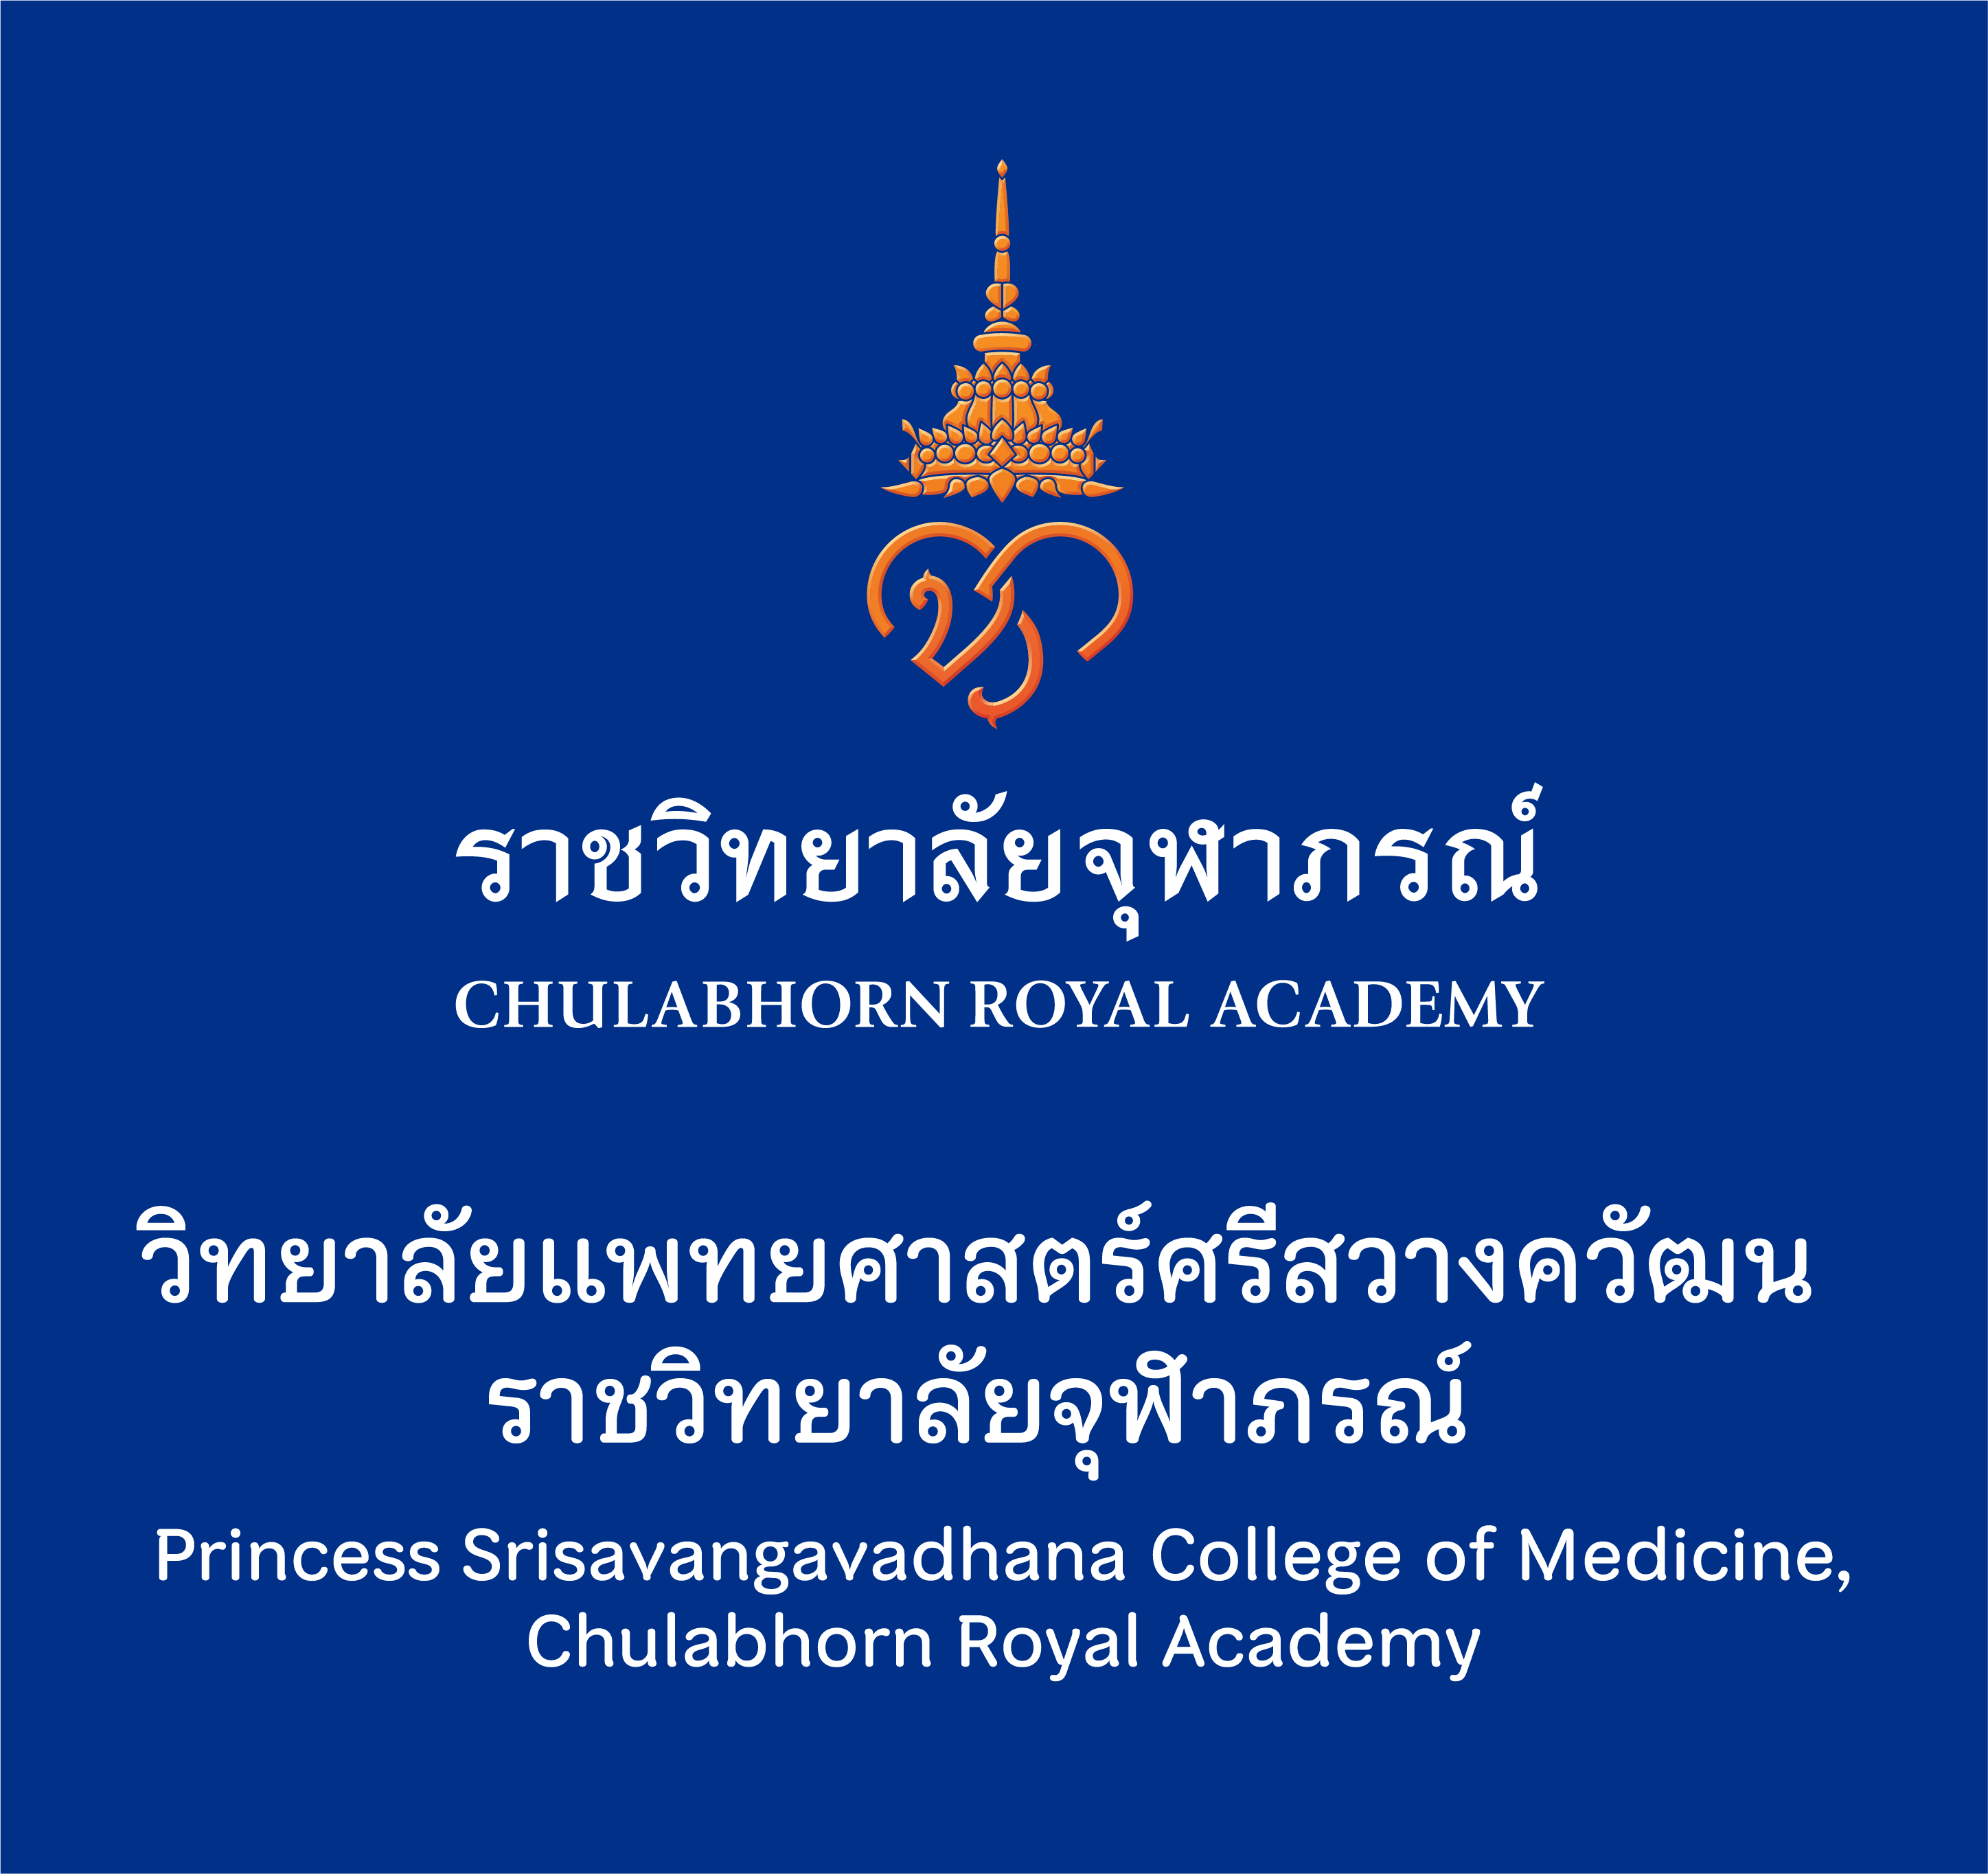 Princess Srisavangavadhana College of Medicine, Chulabhorn Royal Academy Logo